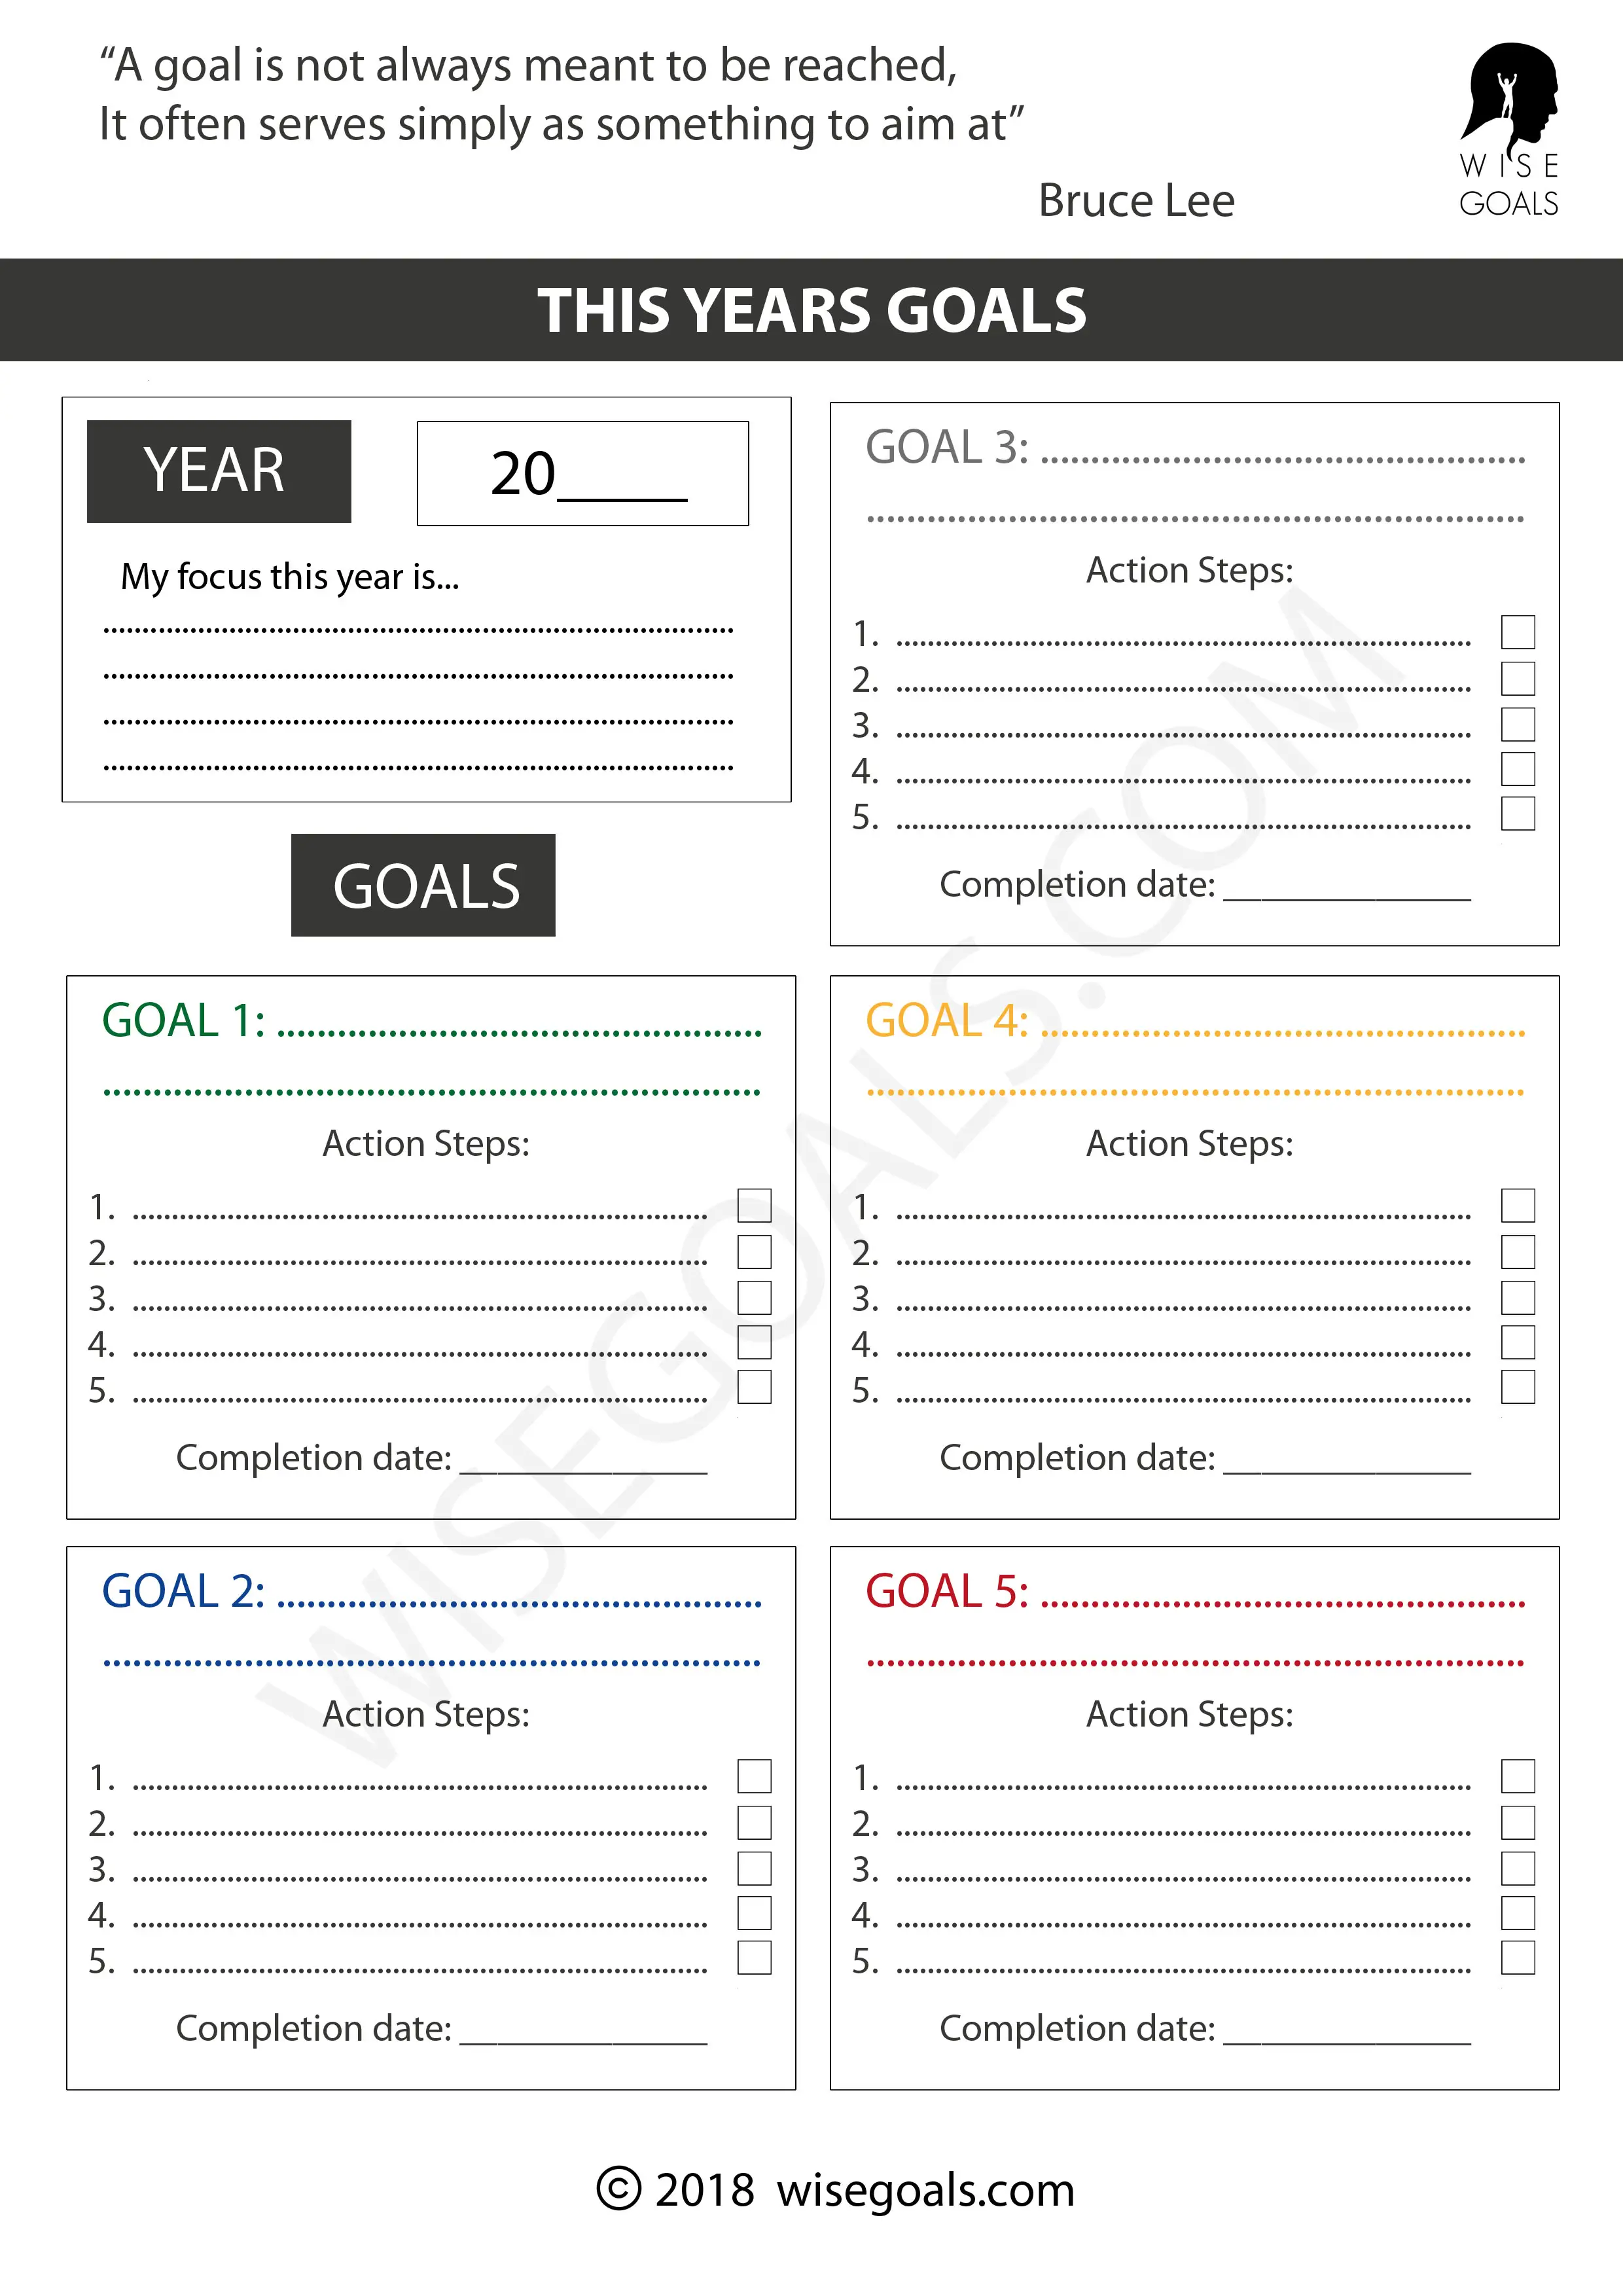 Free Printable Goal Setting Worksheets.